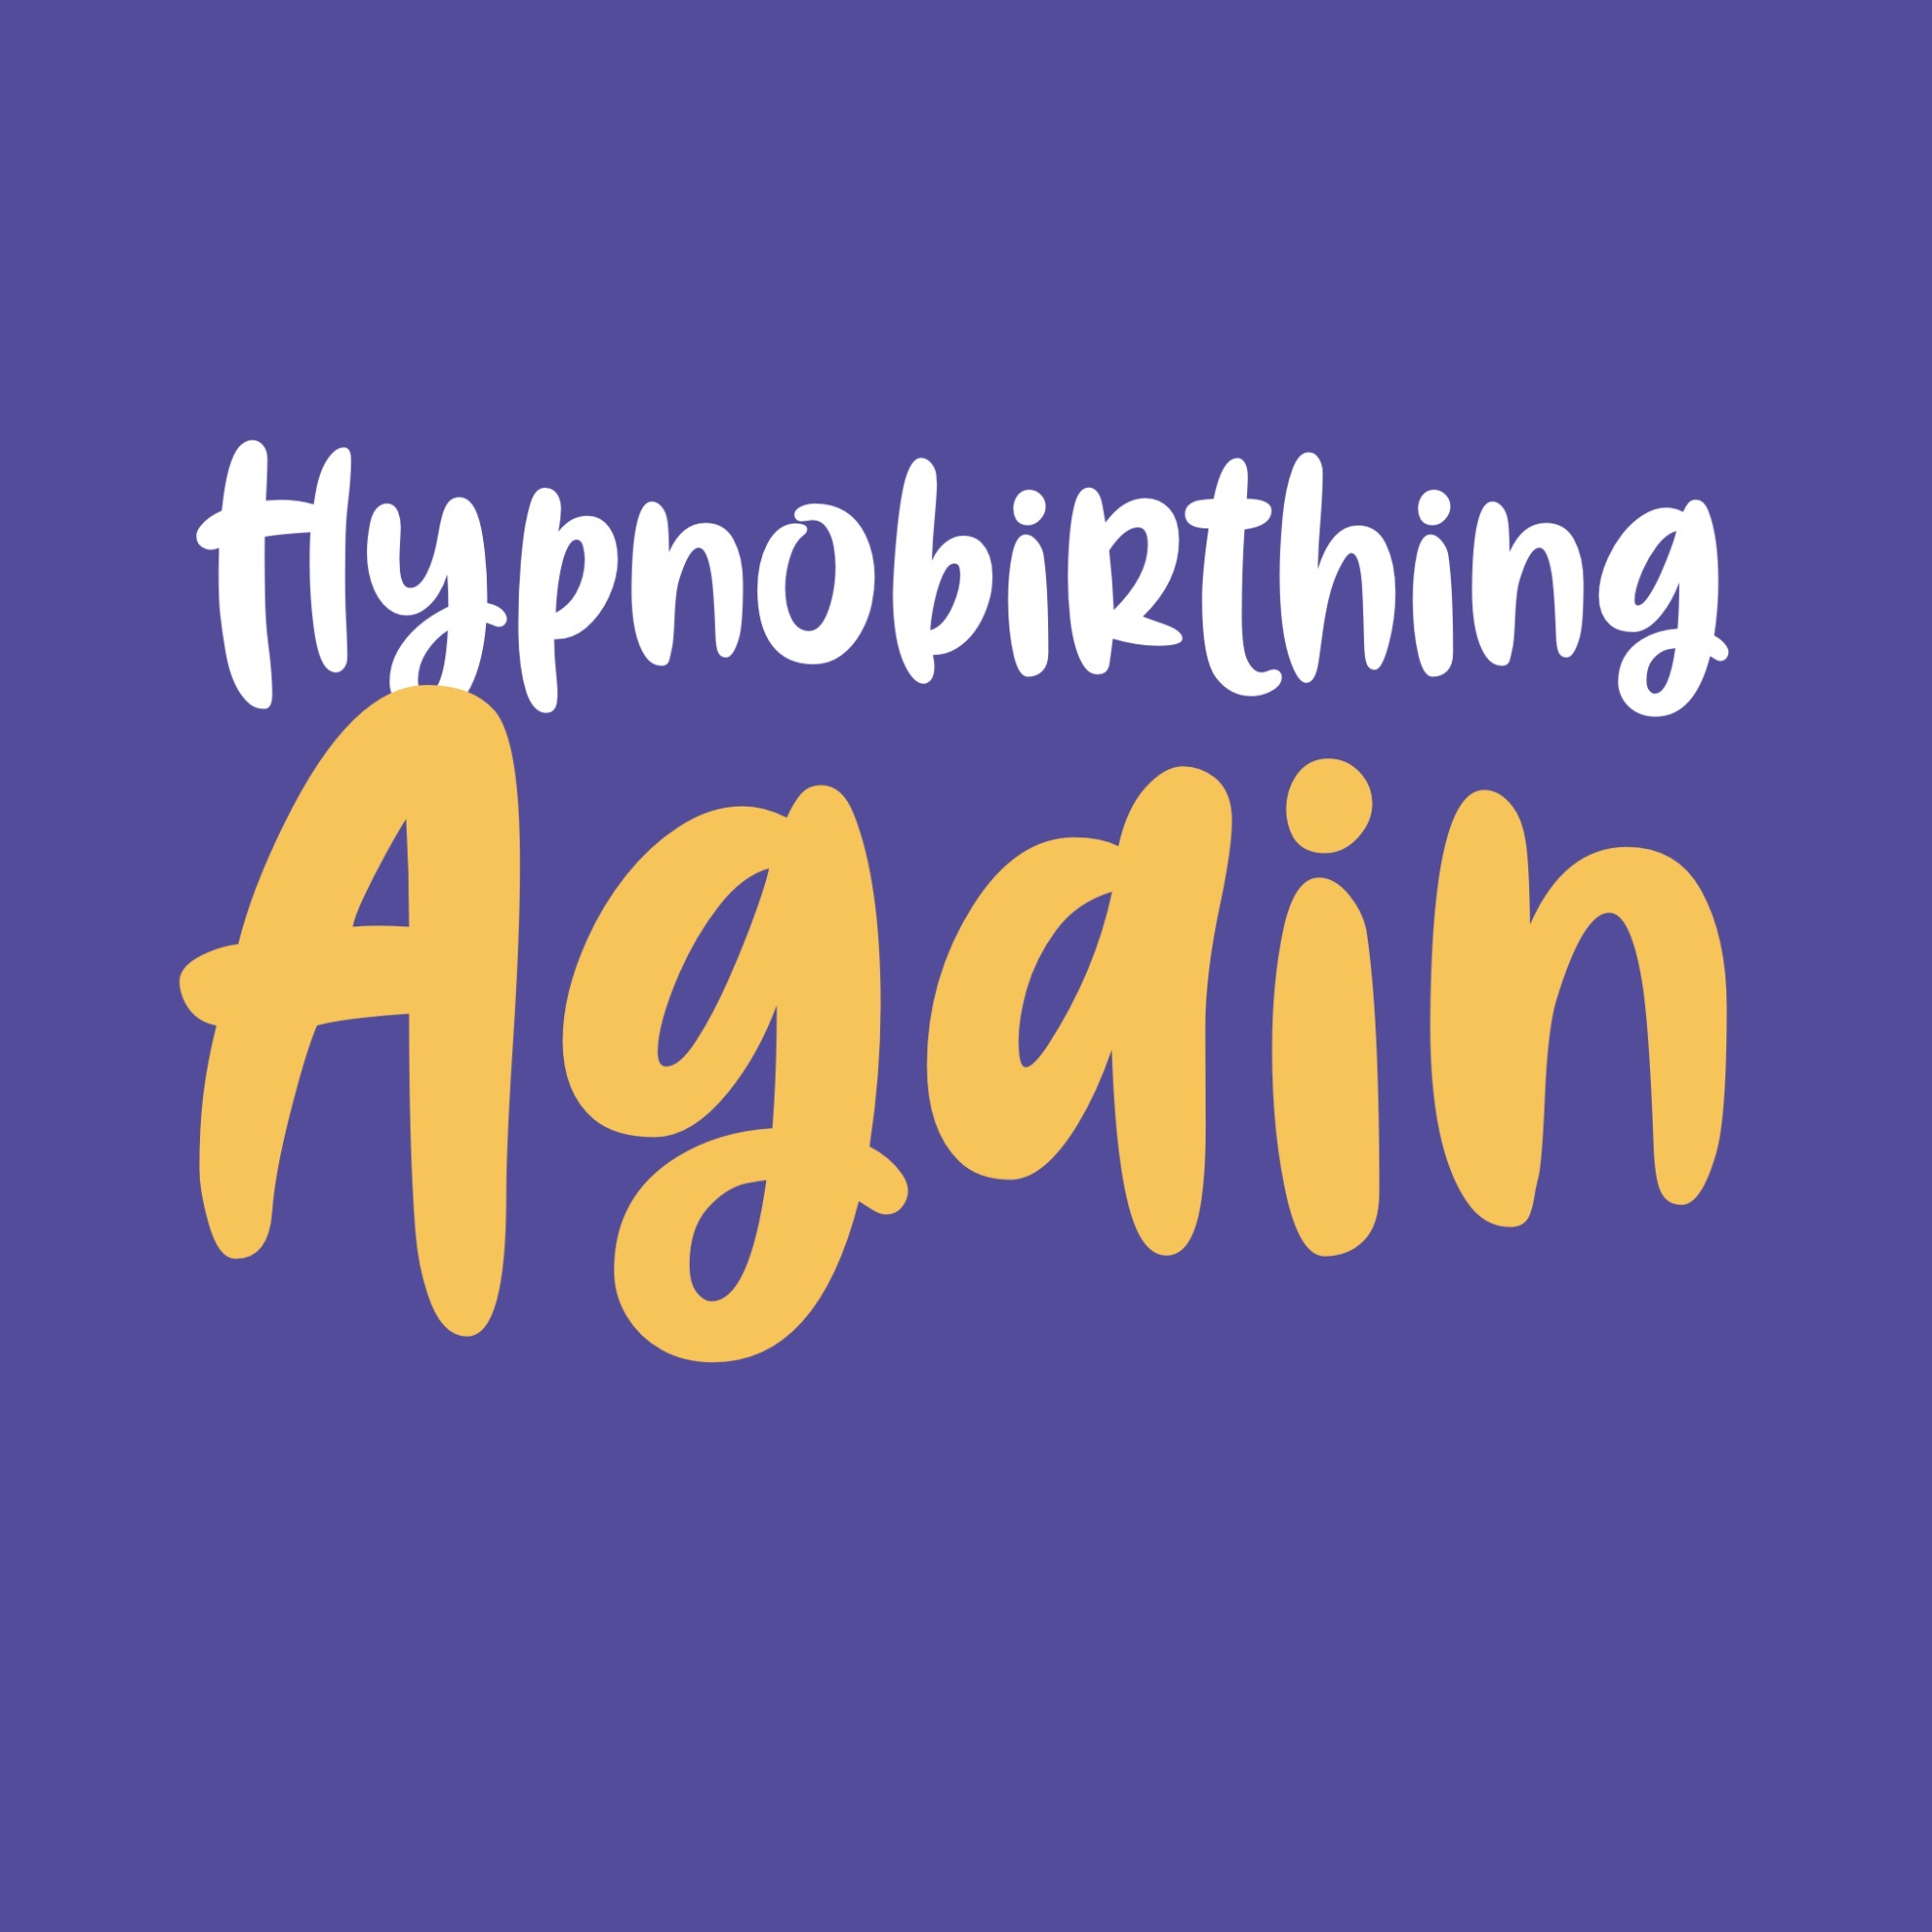 hypnobirthing again